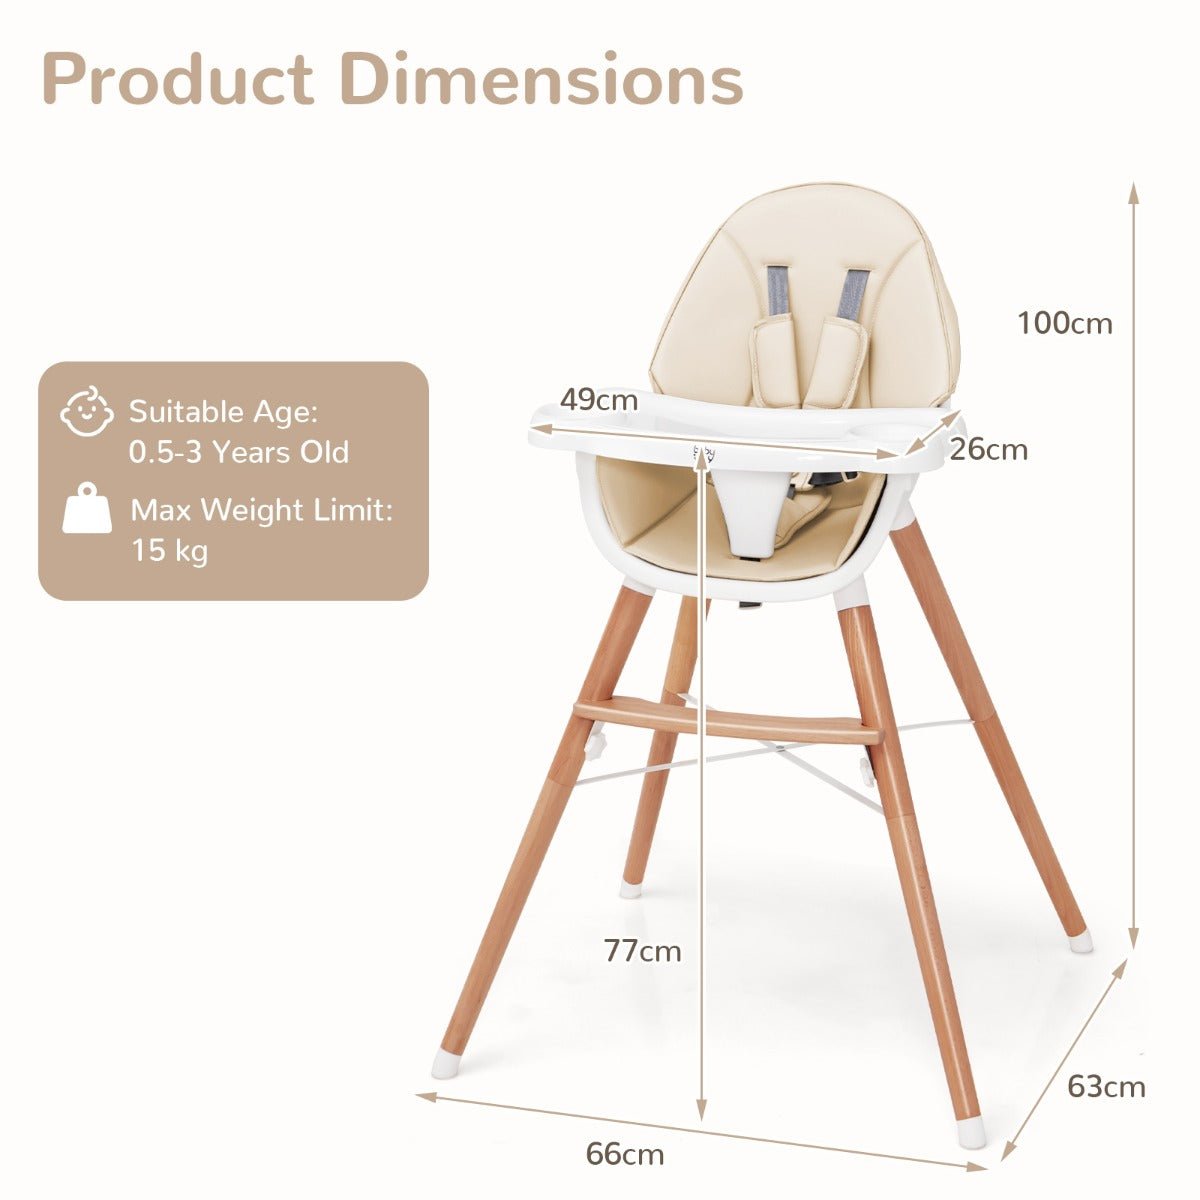 High Chair Measurements